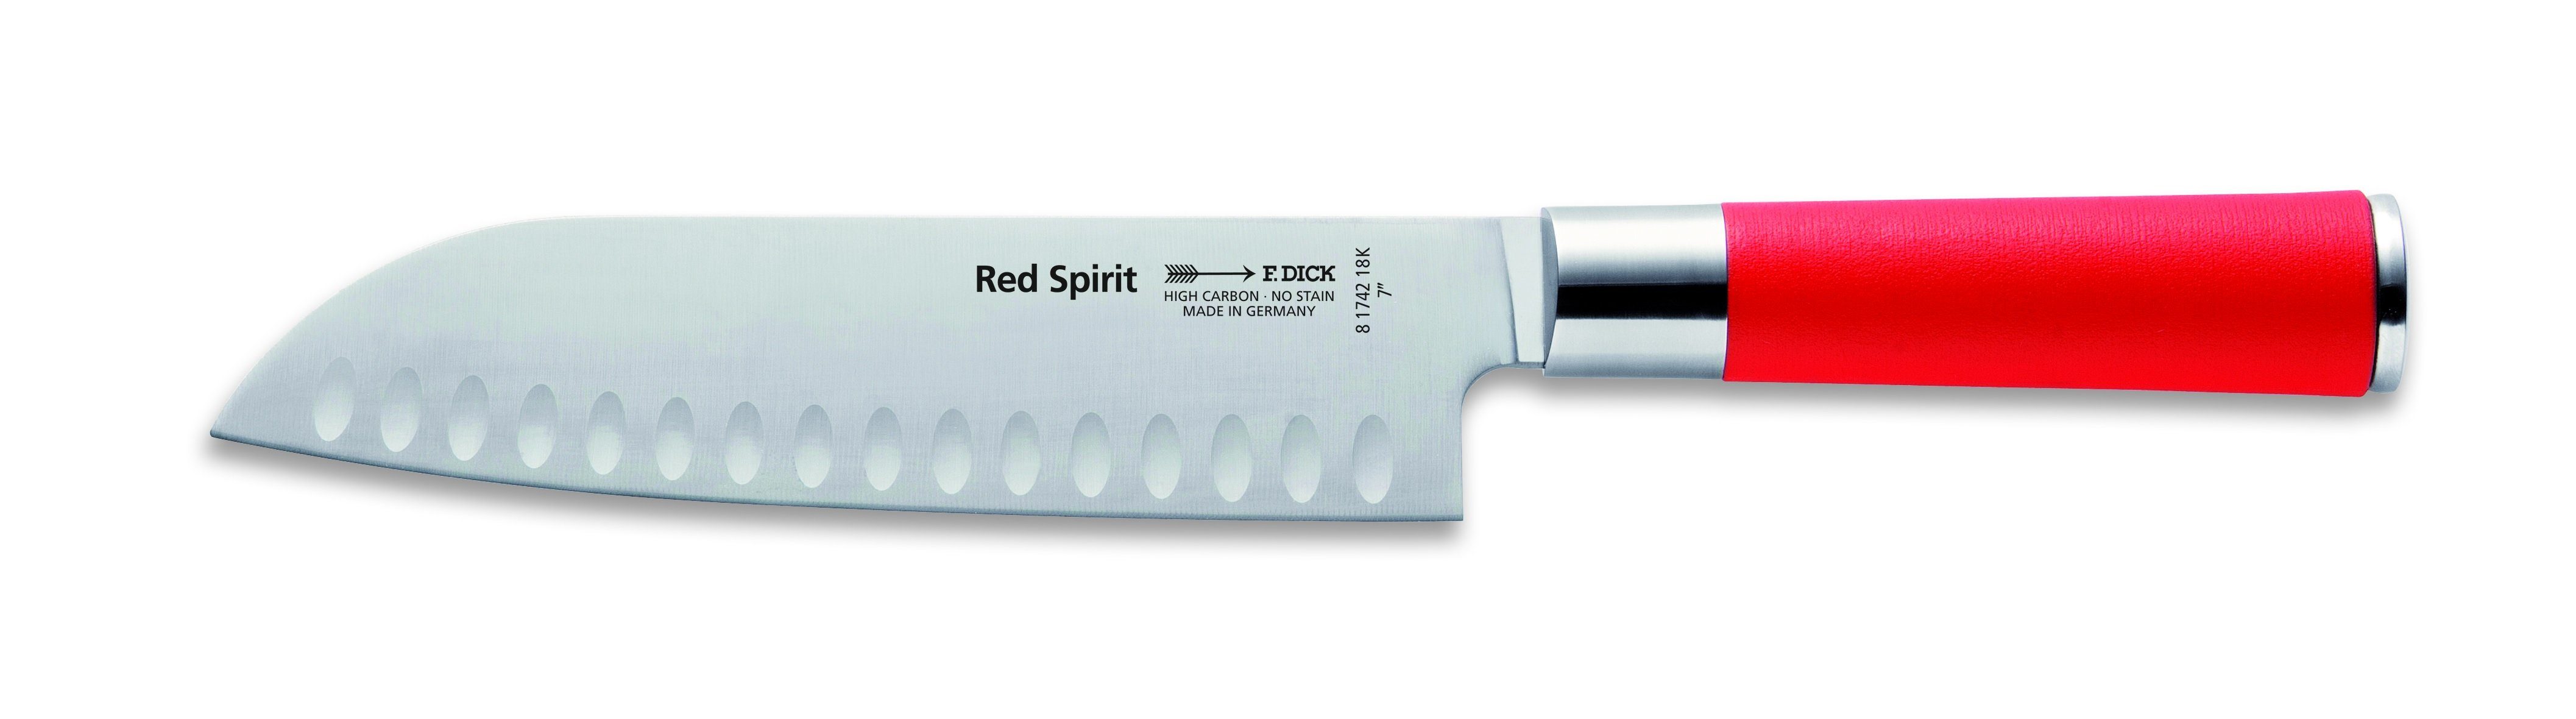 Spirit Dick Messer Klinge 8174218K 18 Santoku Serie Red Dick mit Santokumesser der Kullen